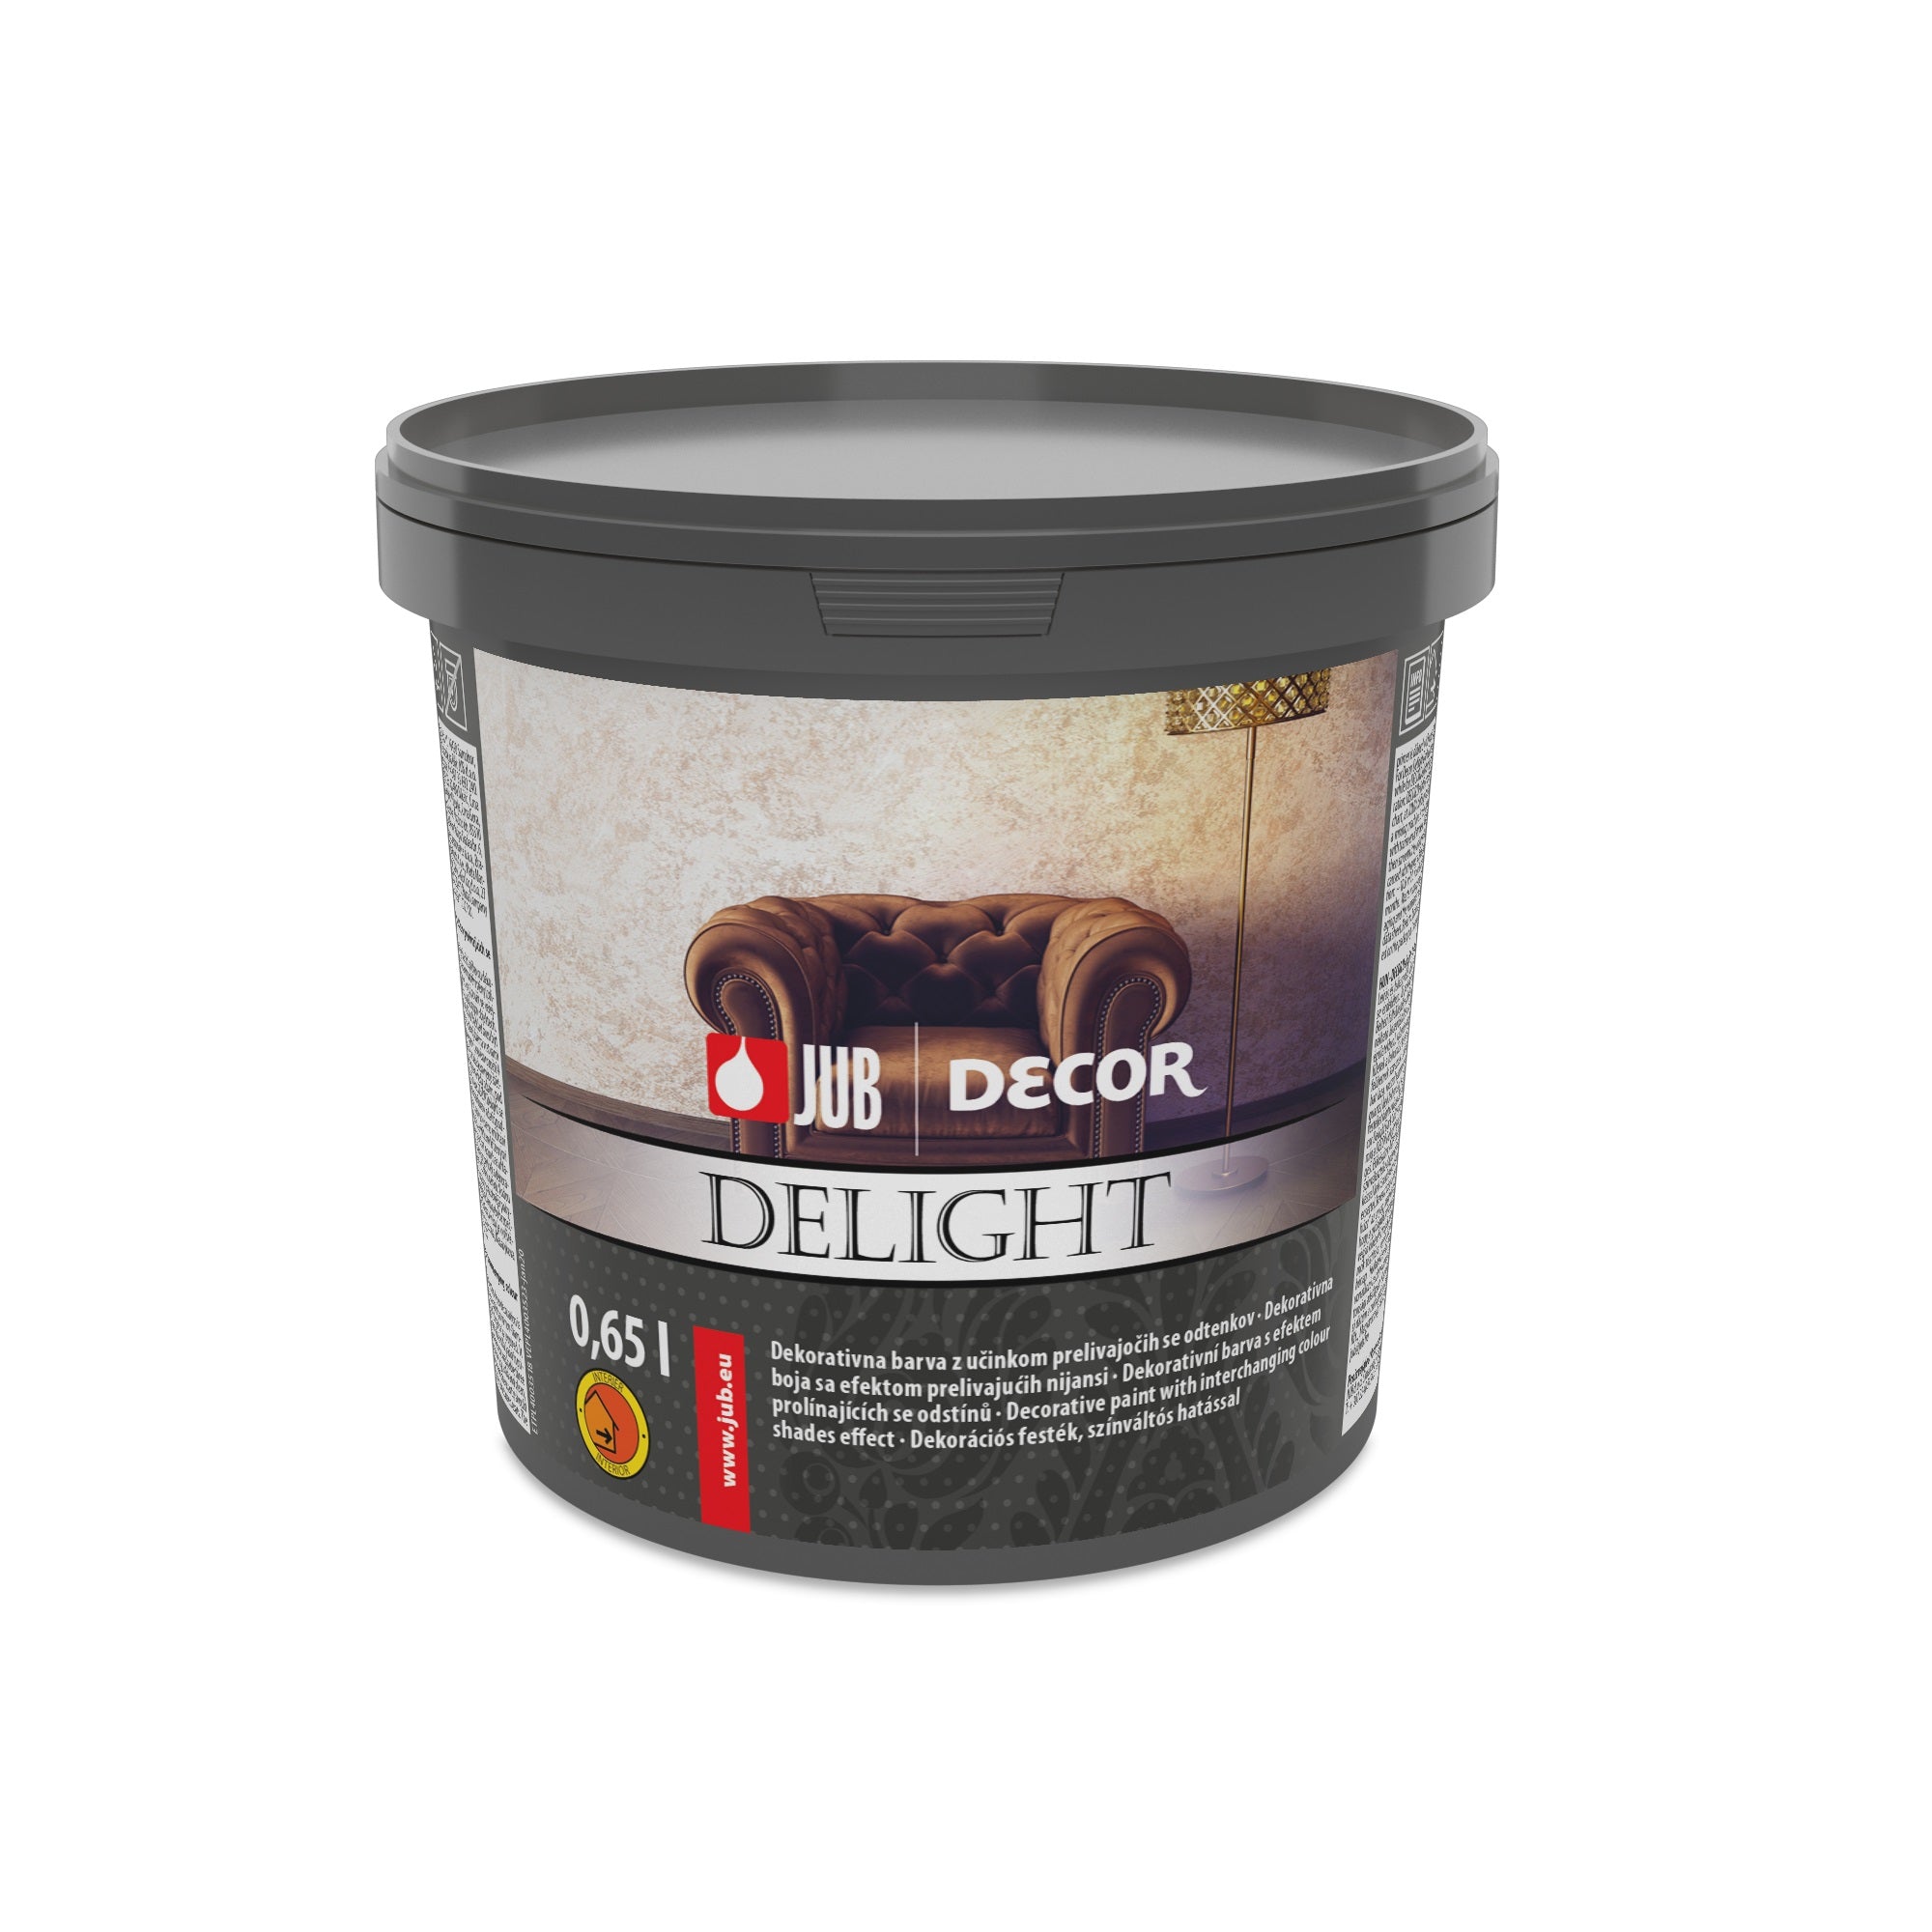 JUB DECOR Delight Dekoratívna farba s prelievajúcim efektom 0,65 l